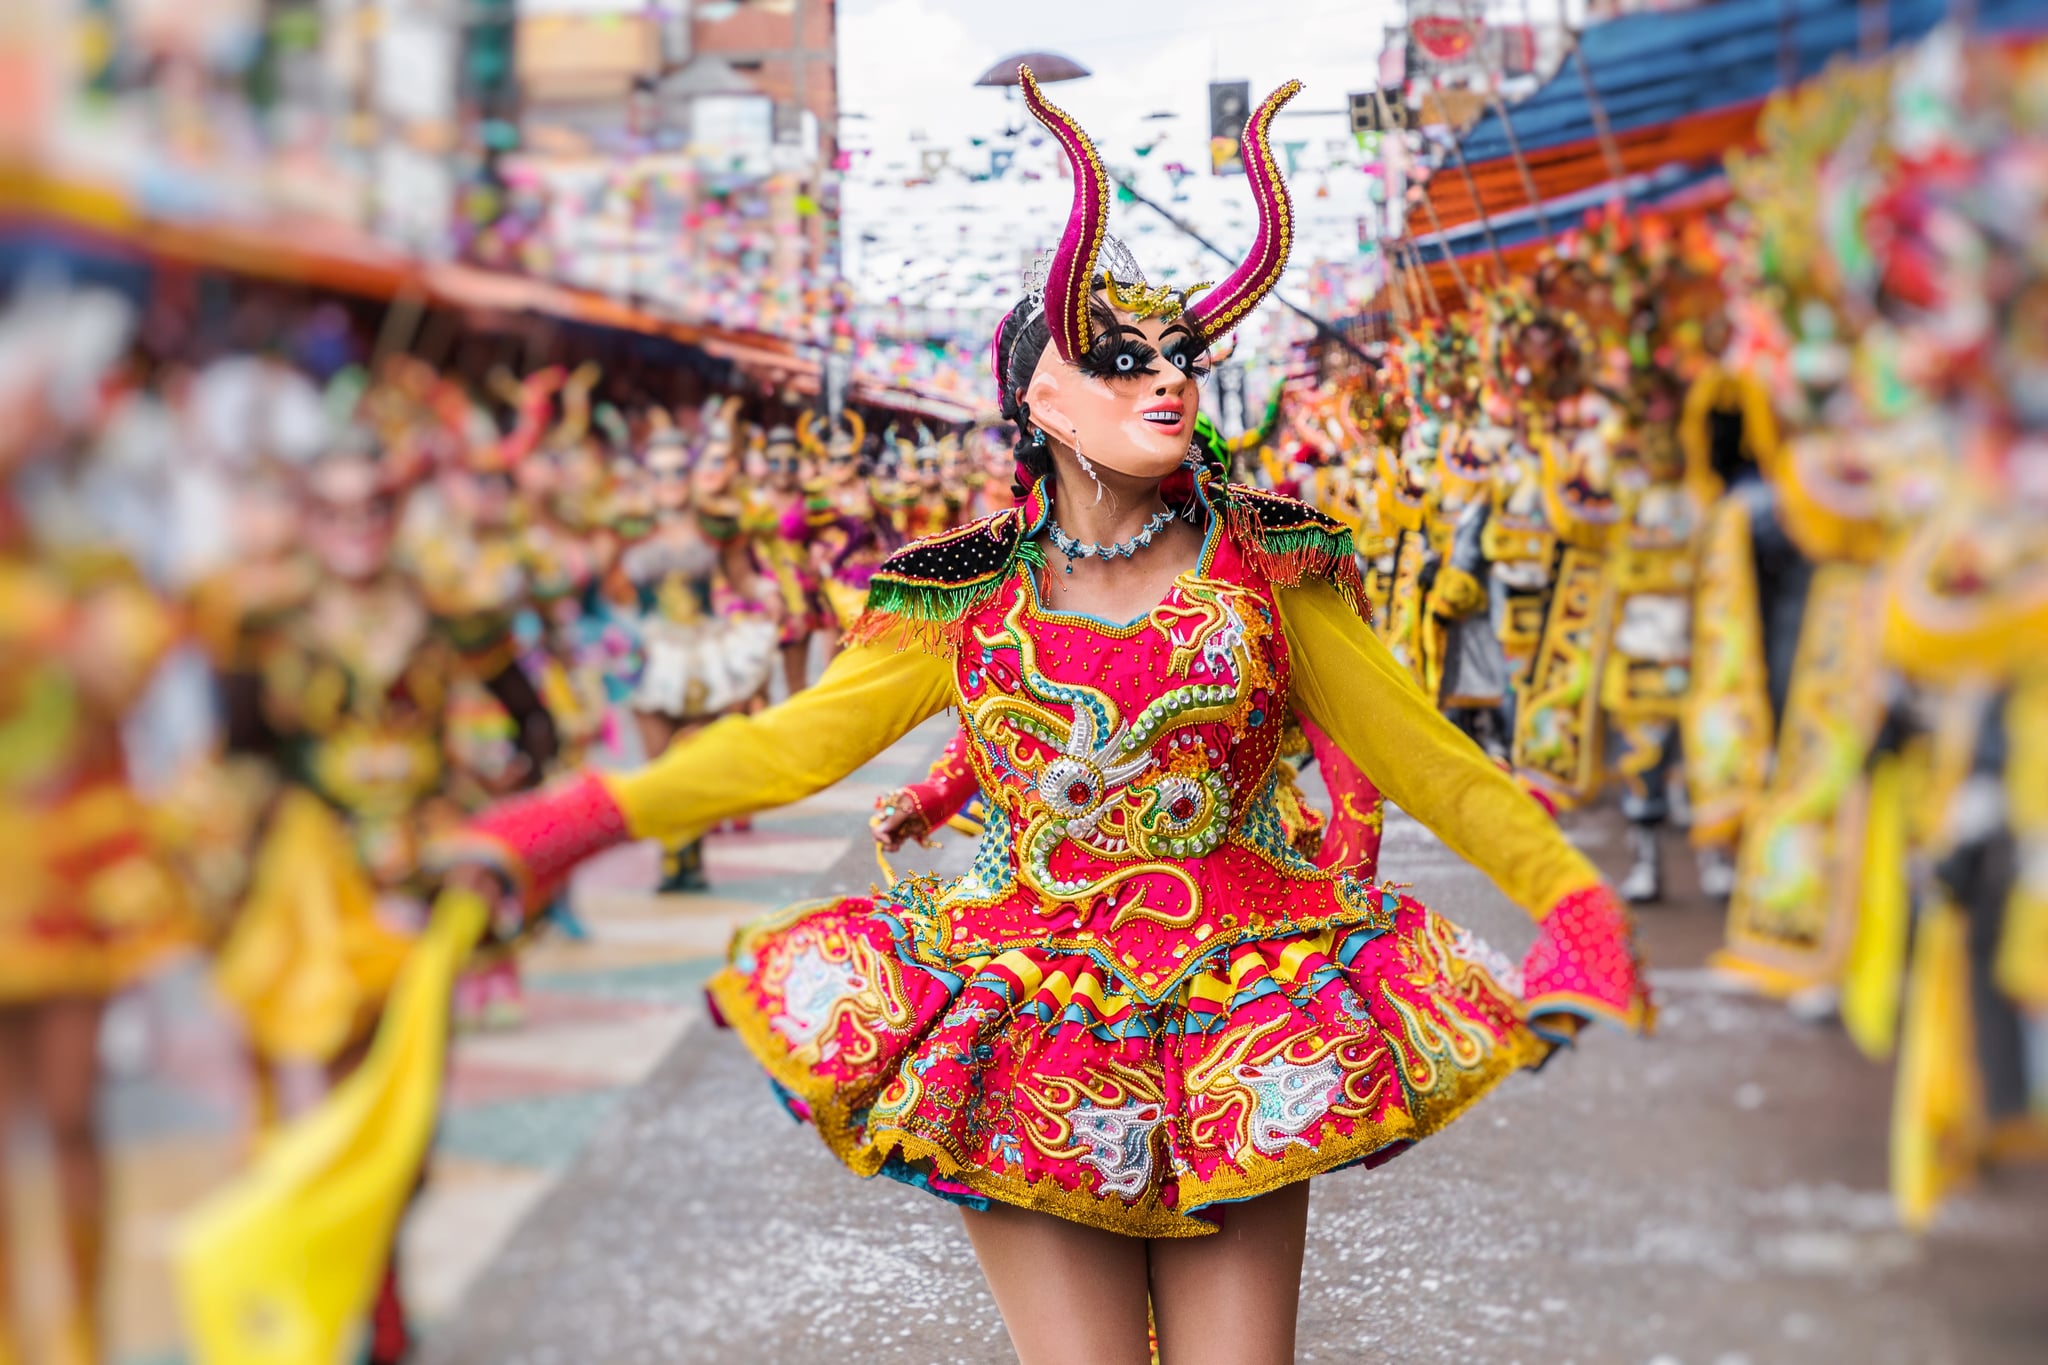 Dance, Costumes, and Music From Fiestas Patrias | POPSUGAR Latina